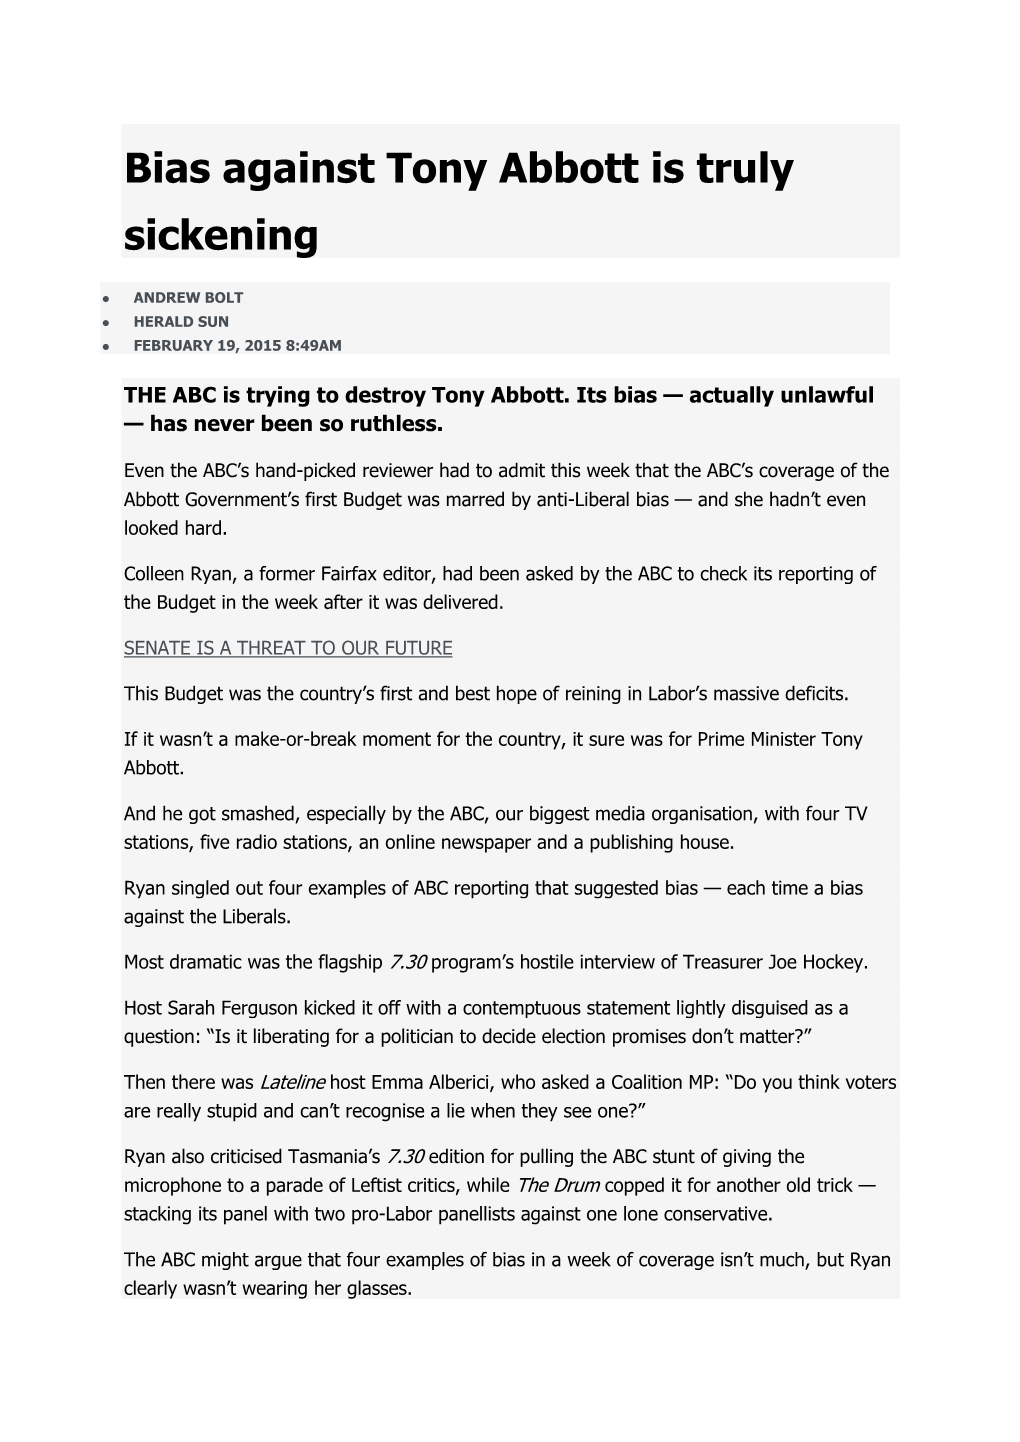 Bias Against Tony Abbott Is Truly Sickening